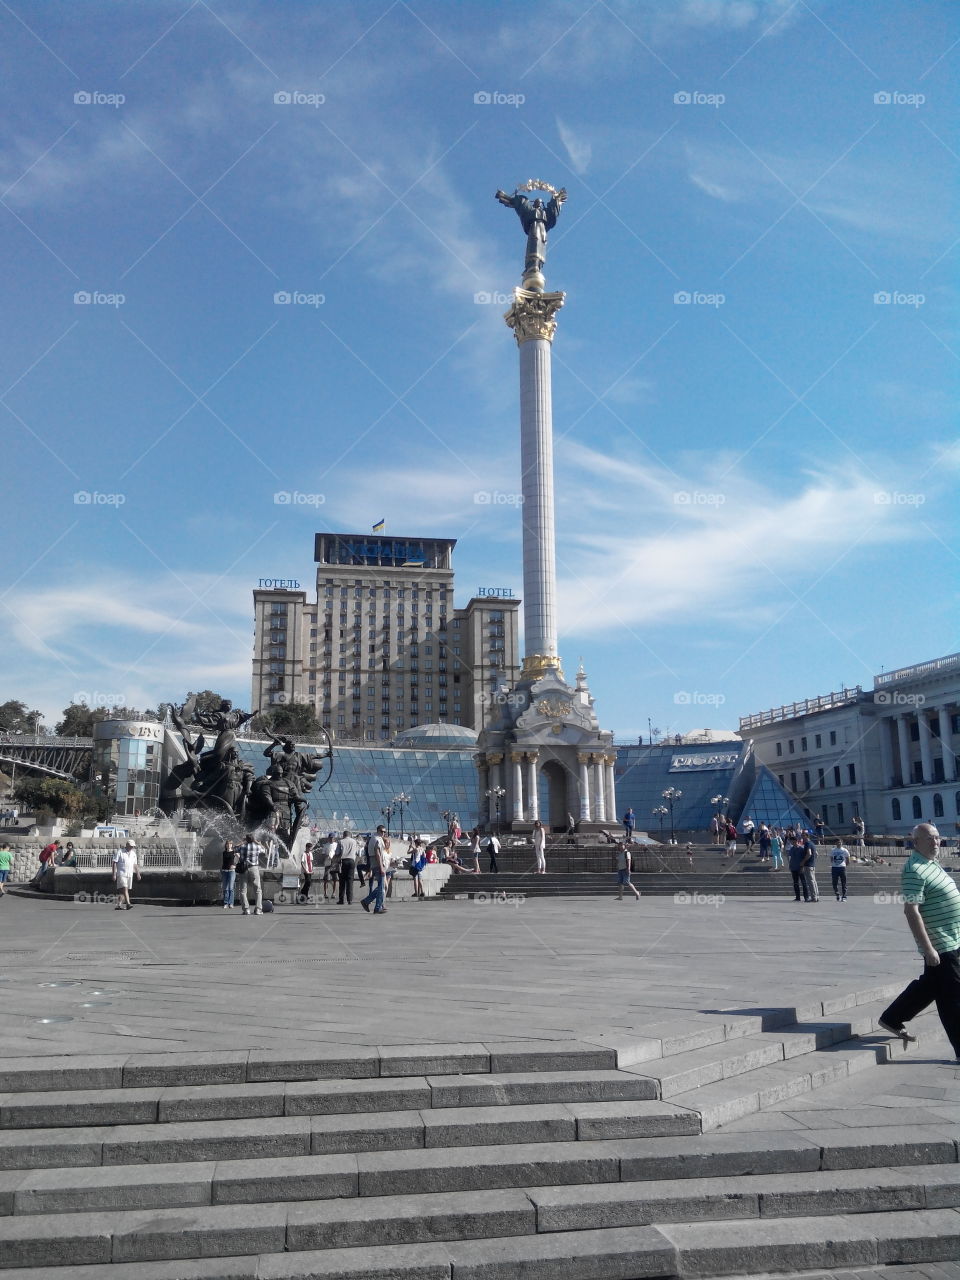 maidan nezalegnosti. kiev Ukraine square